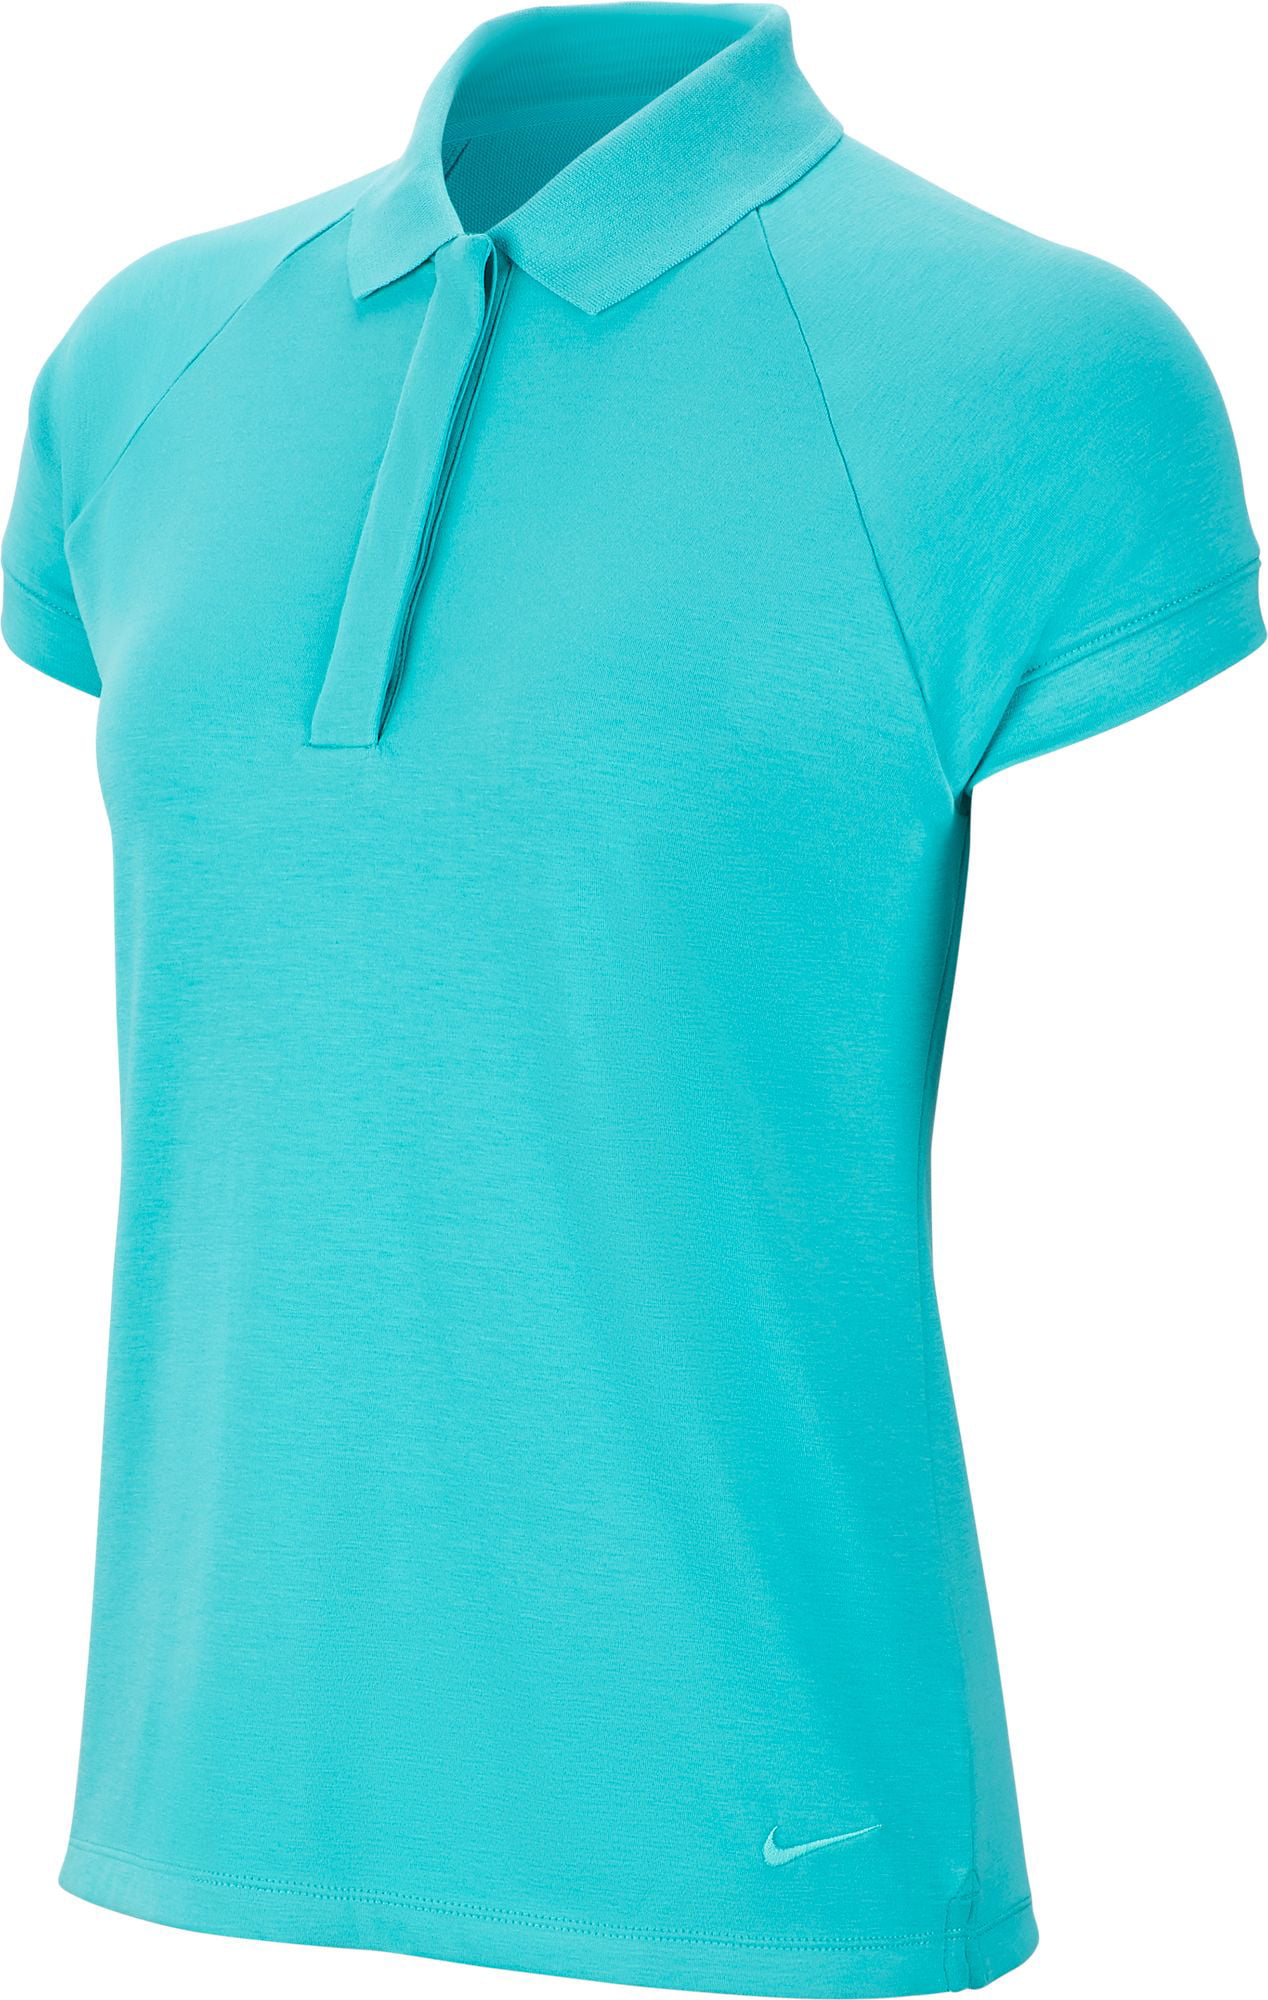 women's dri fit short sleeve shirts